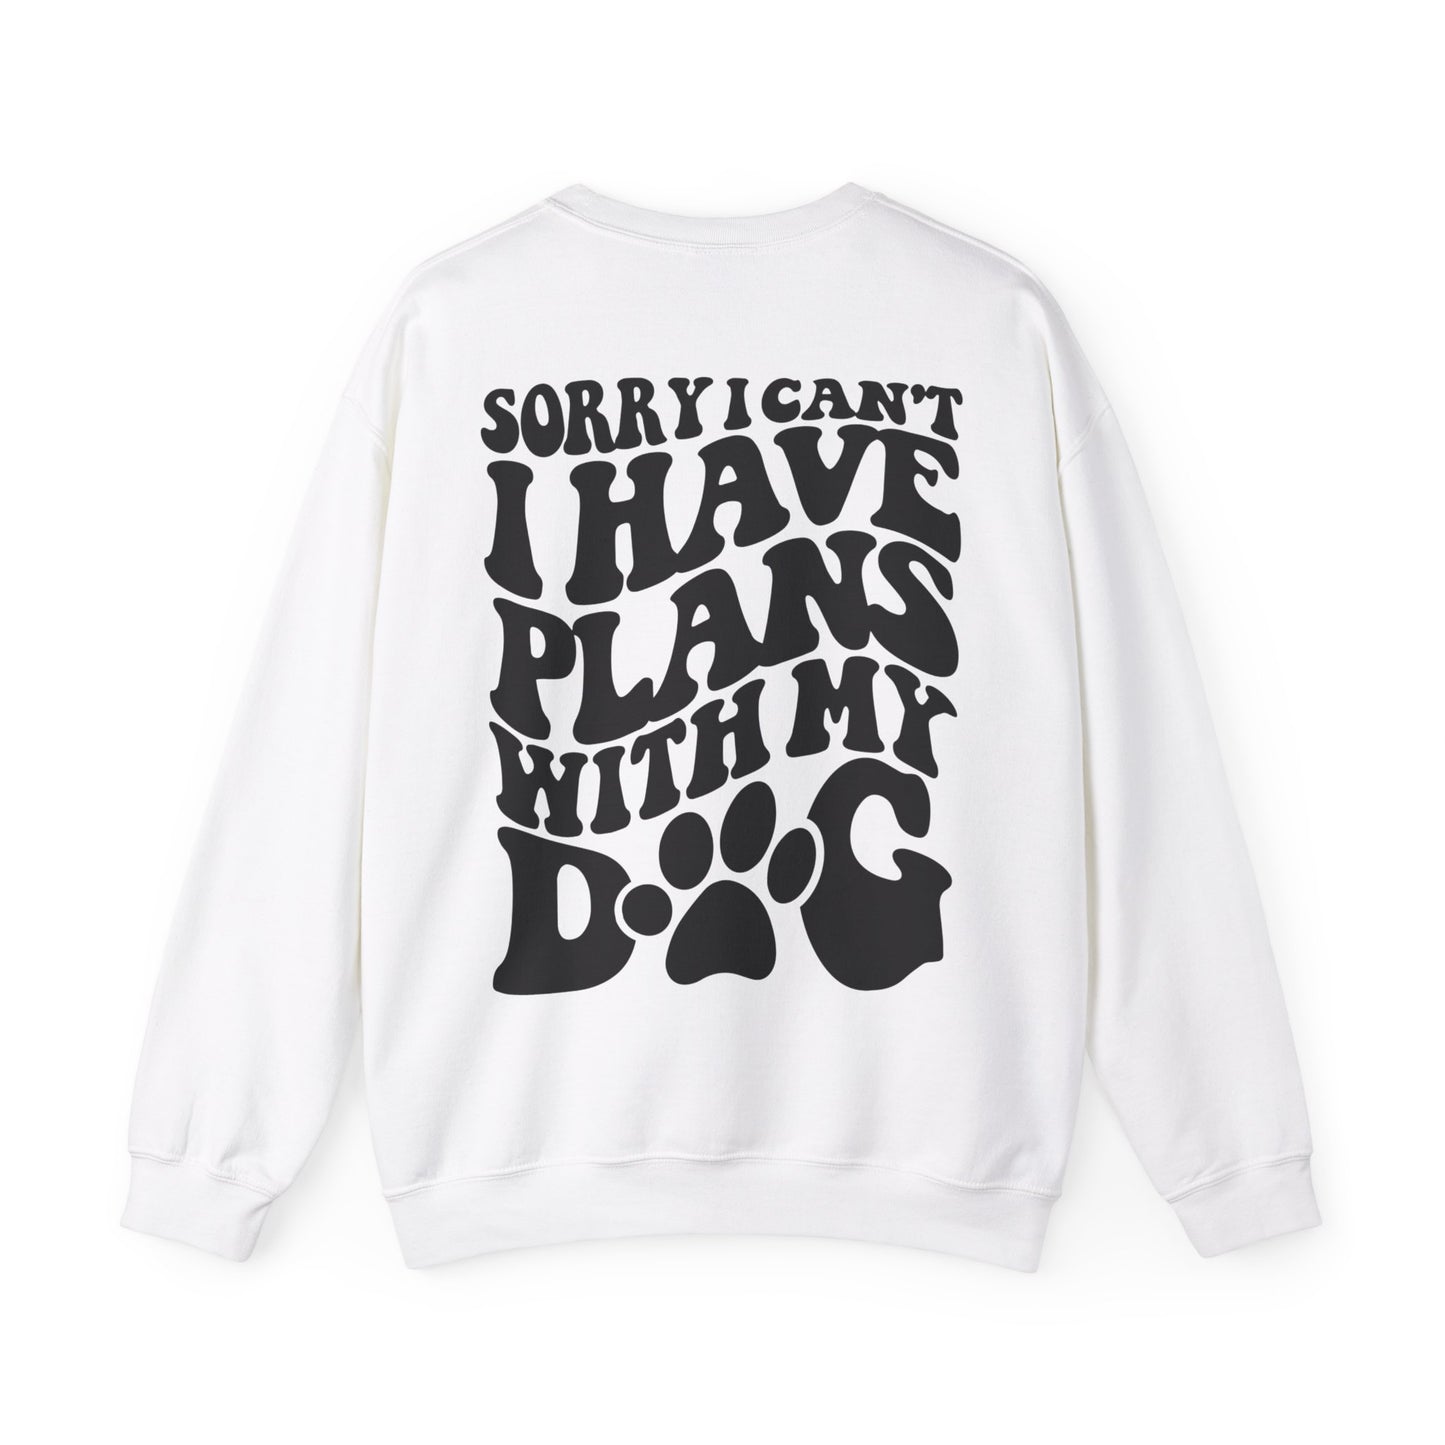 I have plans with my DOG - Crewneck Sweatshirt